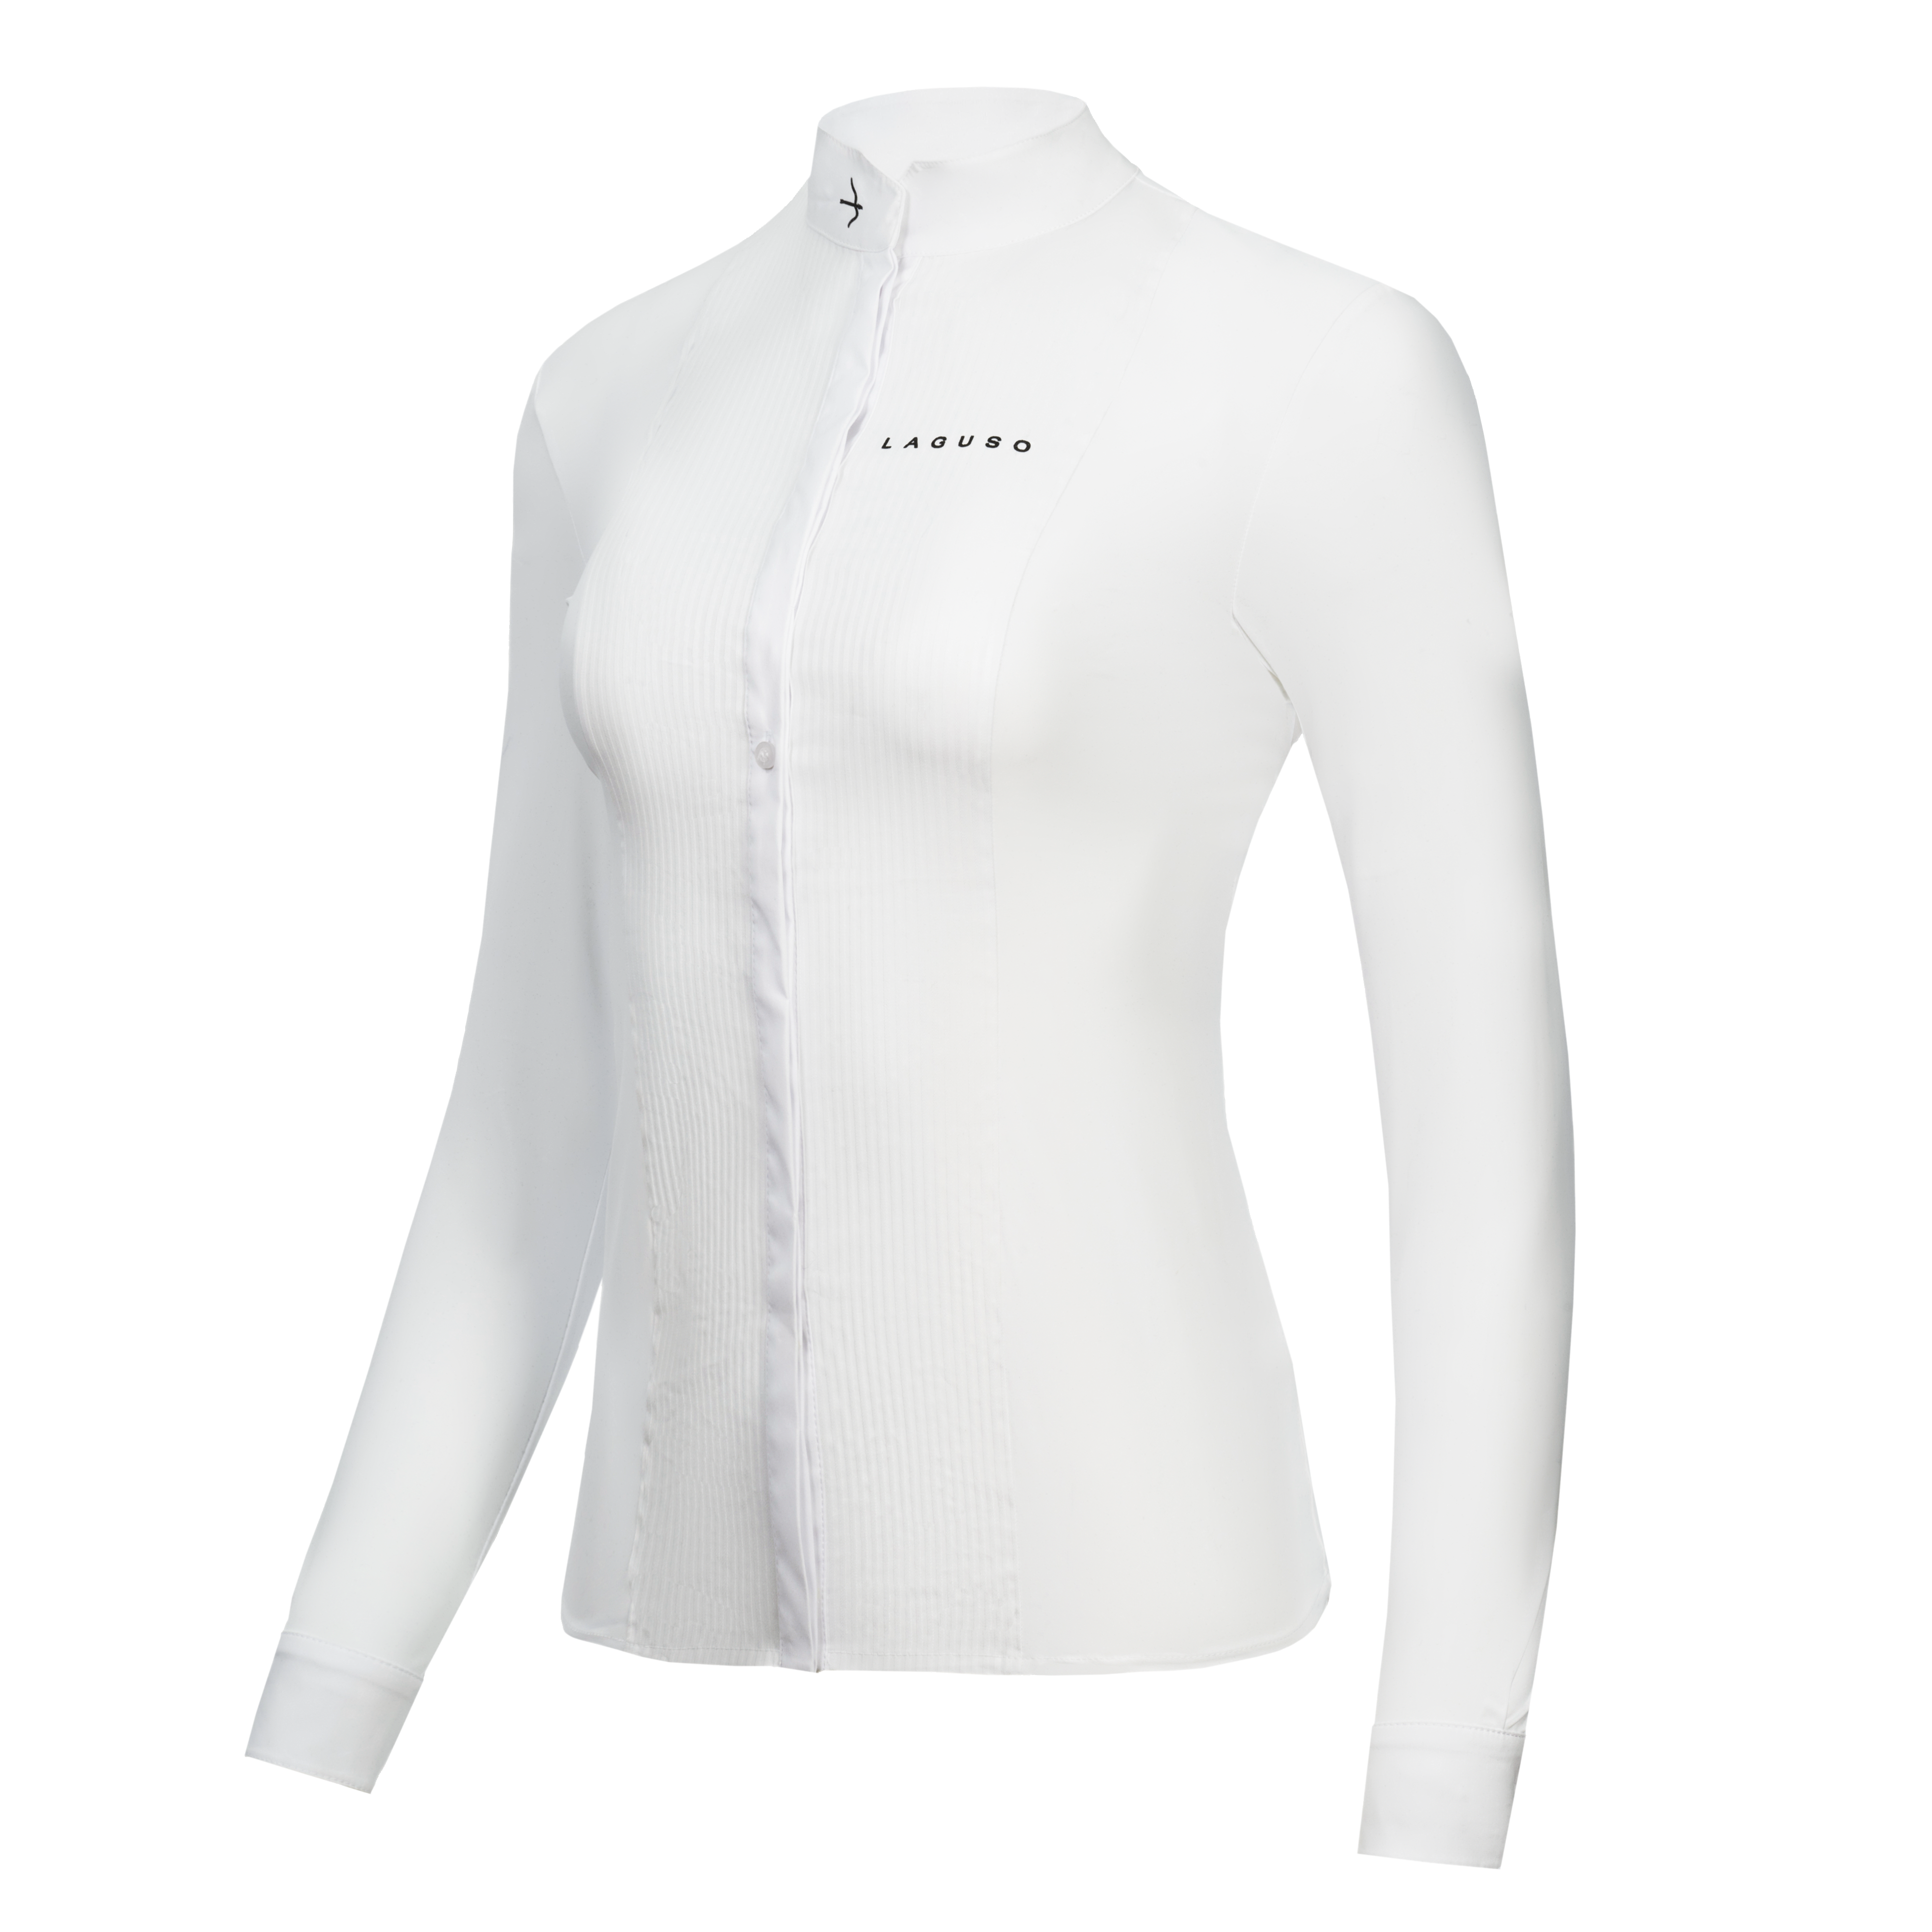 Janne Logo P2 White | Turniershirt White XL/42